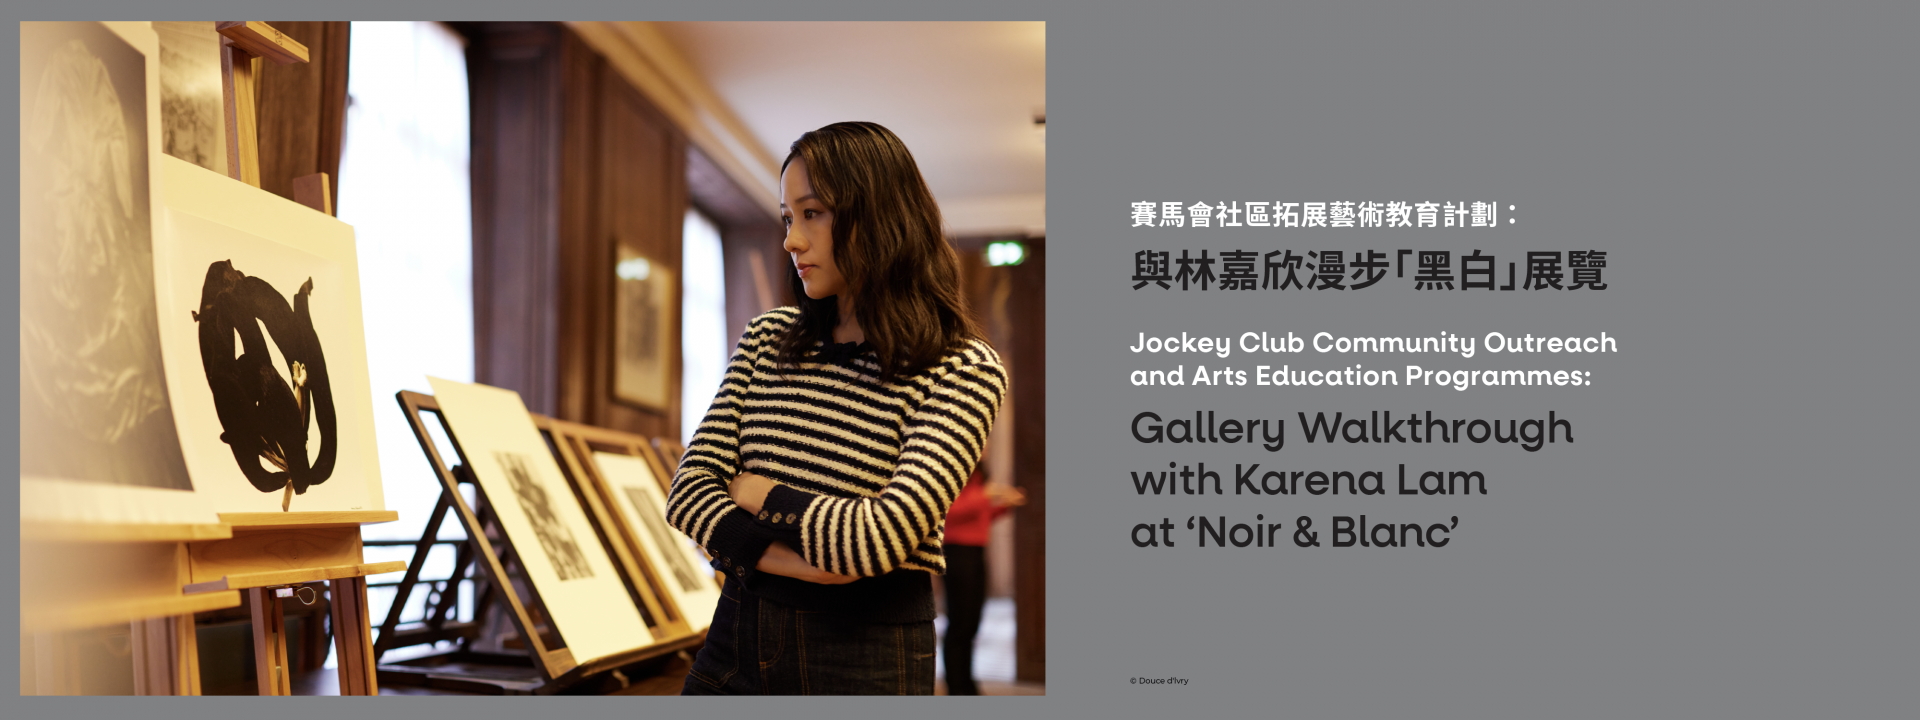 Jockey Club Community Outreach and Arts Education Programmes: Gallery Walkthrough with Karena Lam at 'Noir & Blanc'